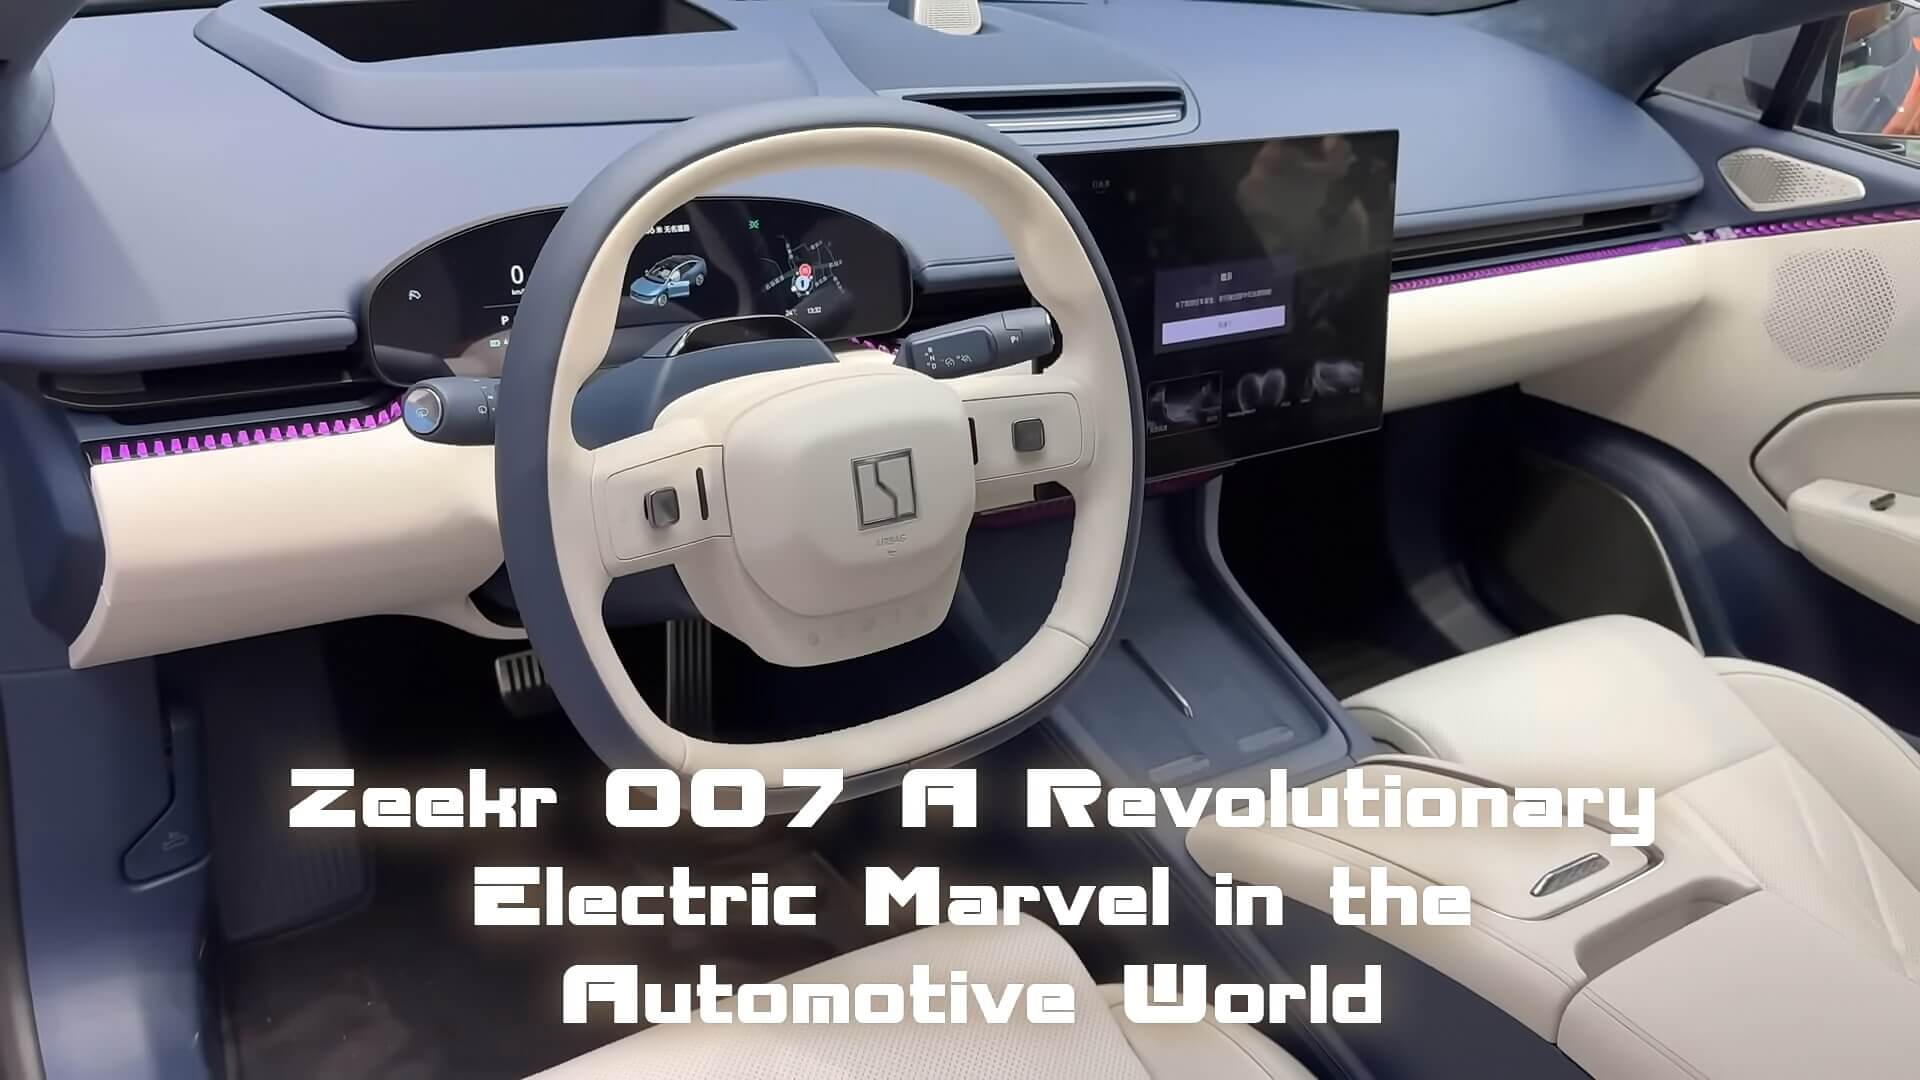 Zeekr 007 A Revolutionary Electric Marvel in the Automotive World